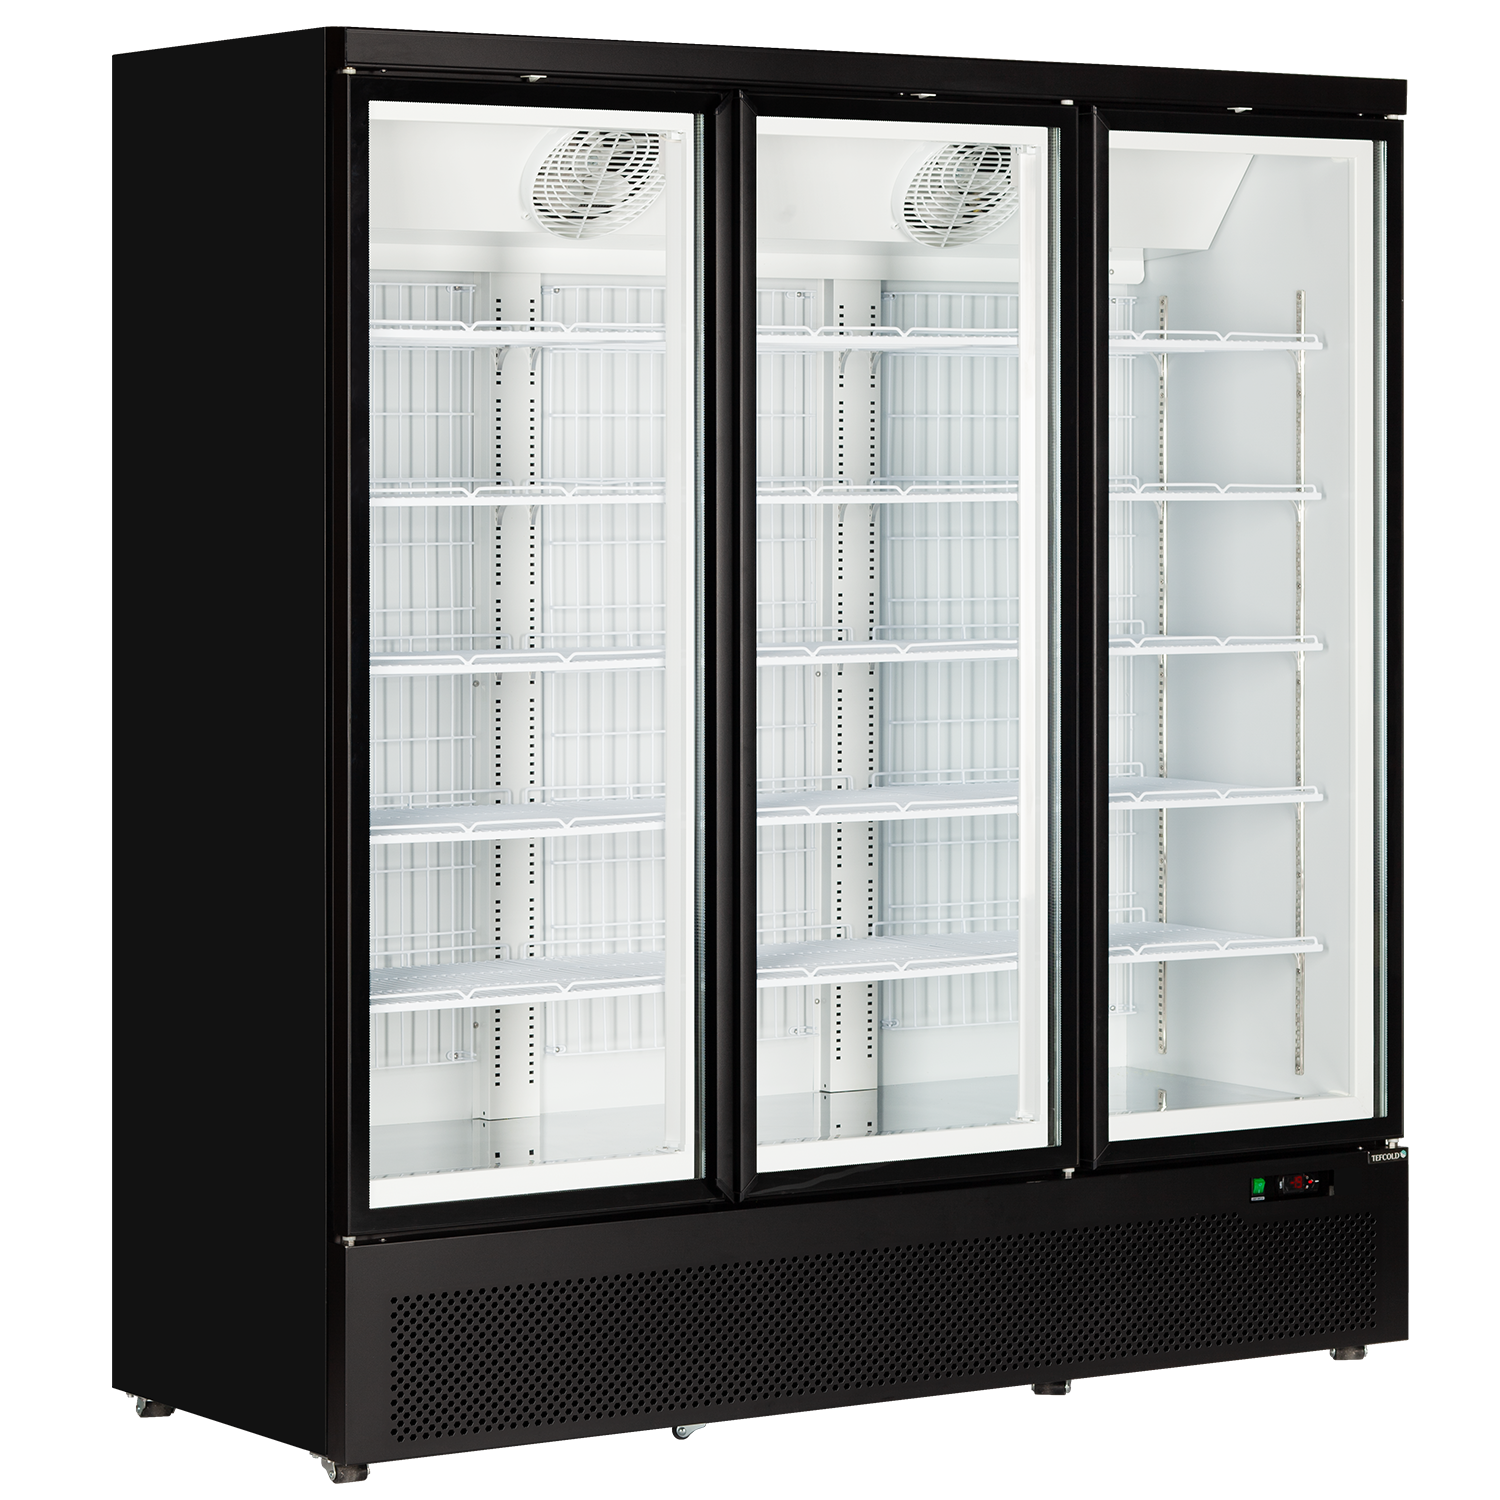 ATOM Maxi 3 Glass Doors Freezer Retail Display Black Range